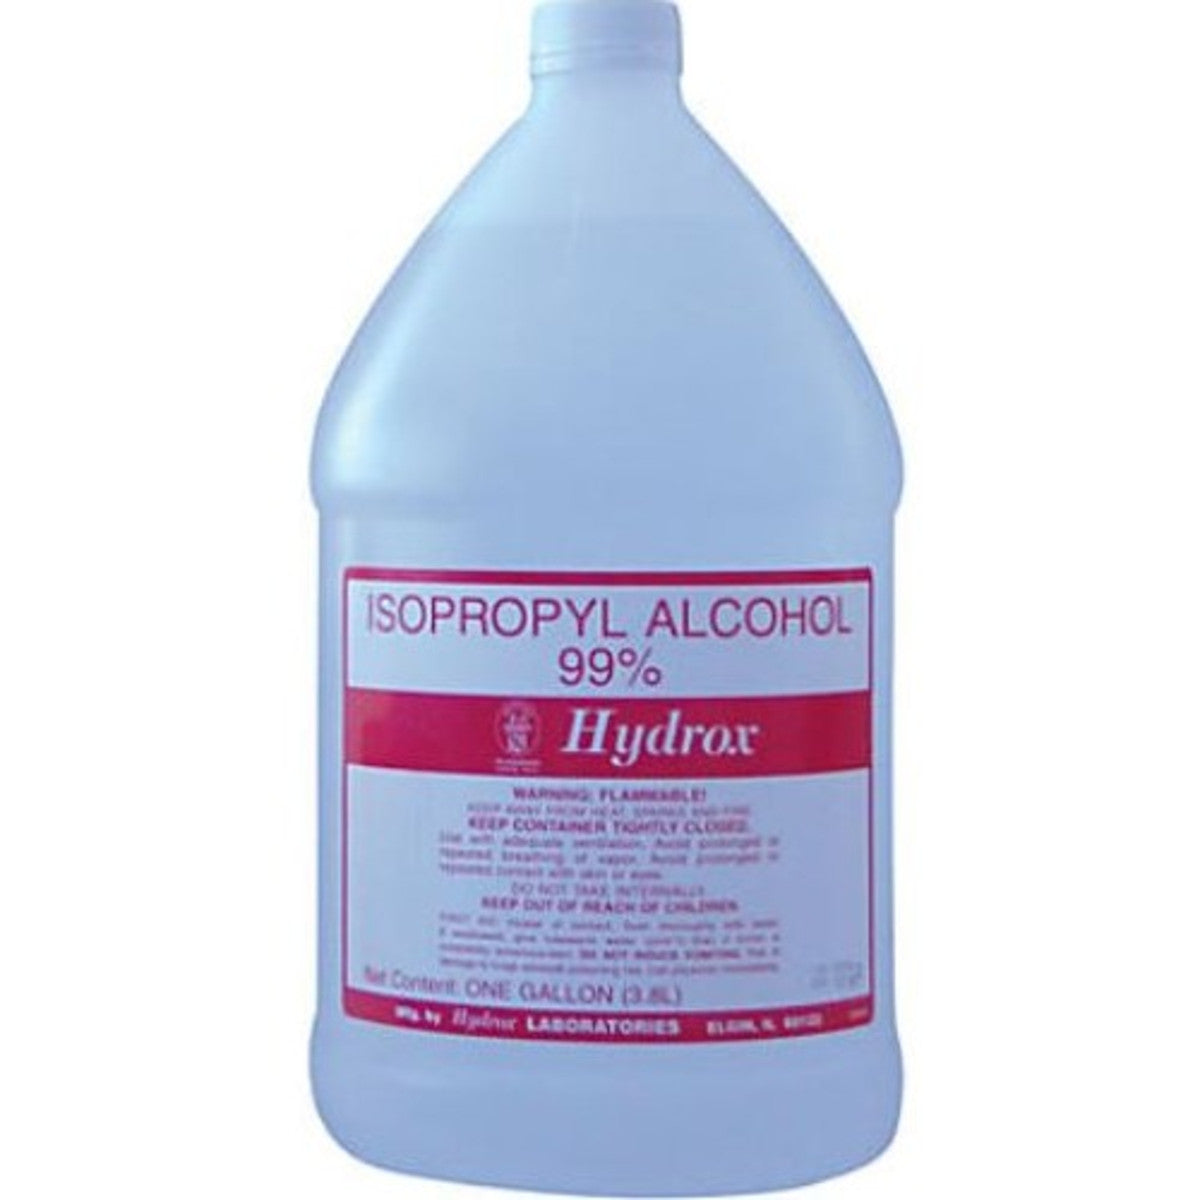 HYDROX LABORATORIES Isopropyl Alcohol 99%, Gallon